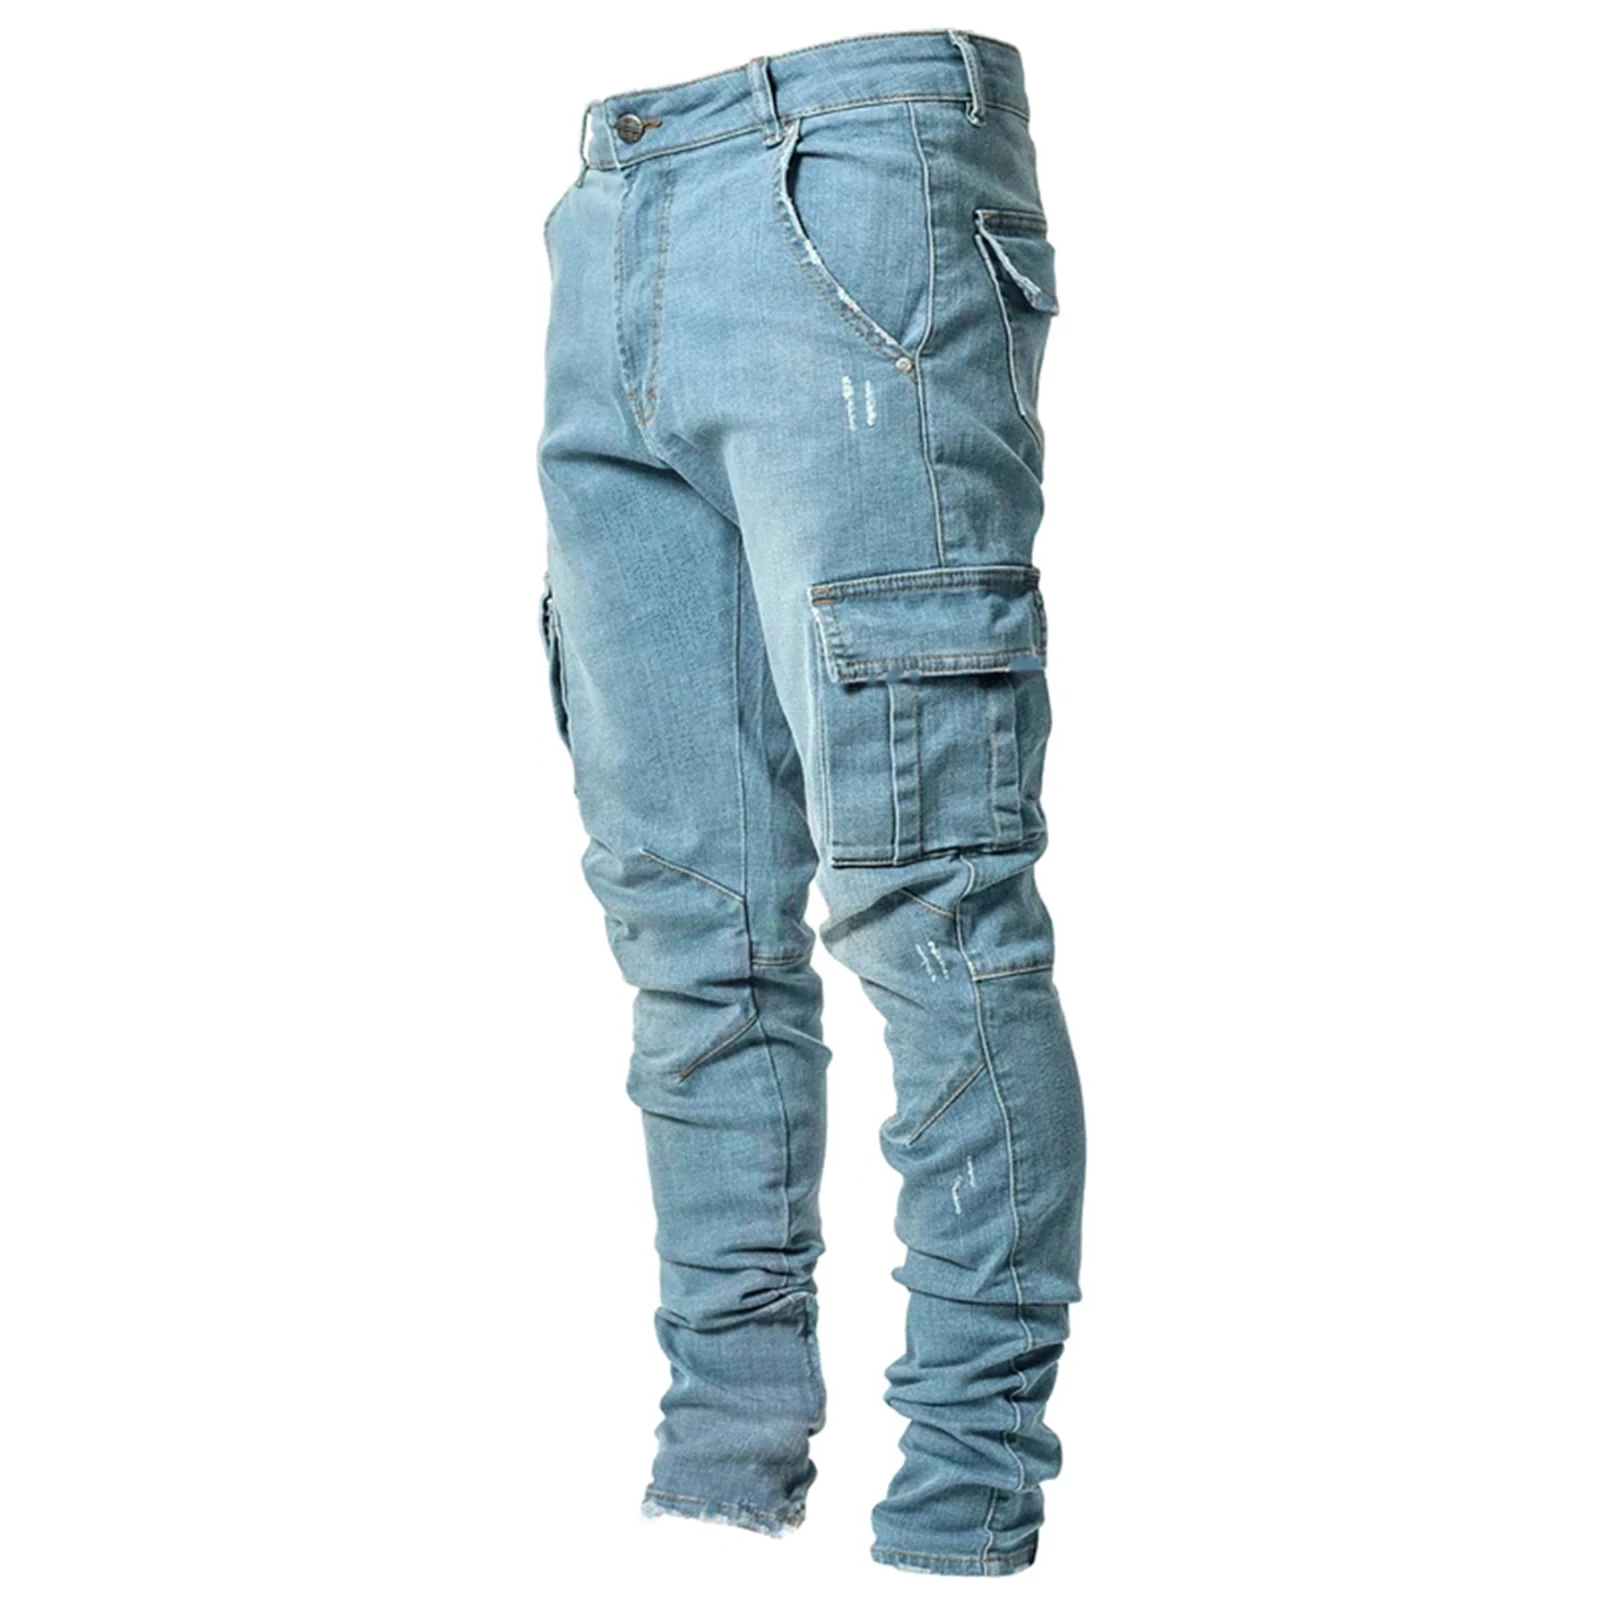 Jeans Men Pants Casual Cotton Denim Trousers Multi Pocket Cargo Jeans Men New Fashion Denim Pencil Pants Side Pockets Cargo black skinny jeans men